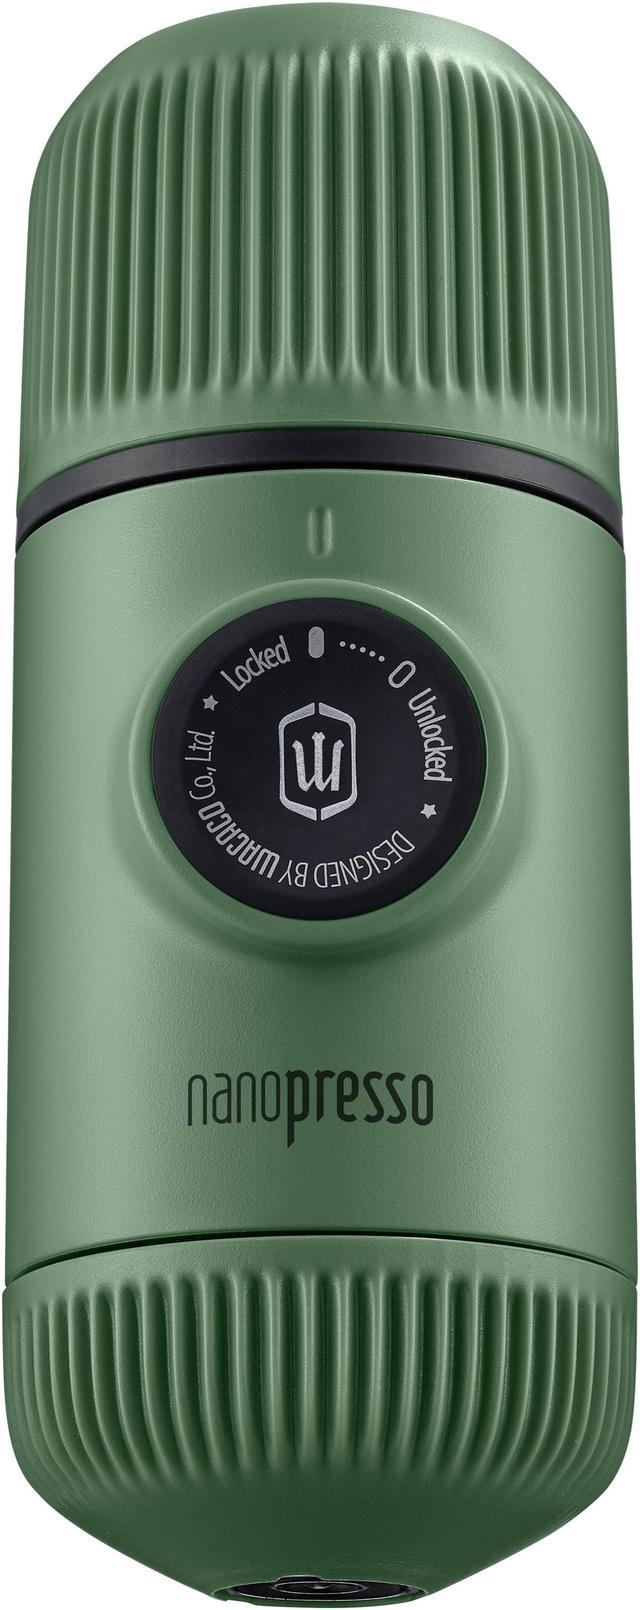 WACACO Nanopresso Elements Portable Espresso Maker bundled with Nanopresso  Protective Case, 18 Bar Pressure, Extra Small Travel Coffee Maker, Manually  Operated - Moss Green 